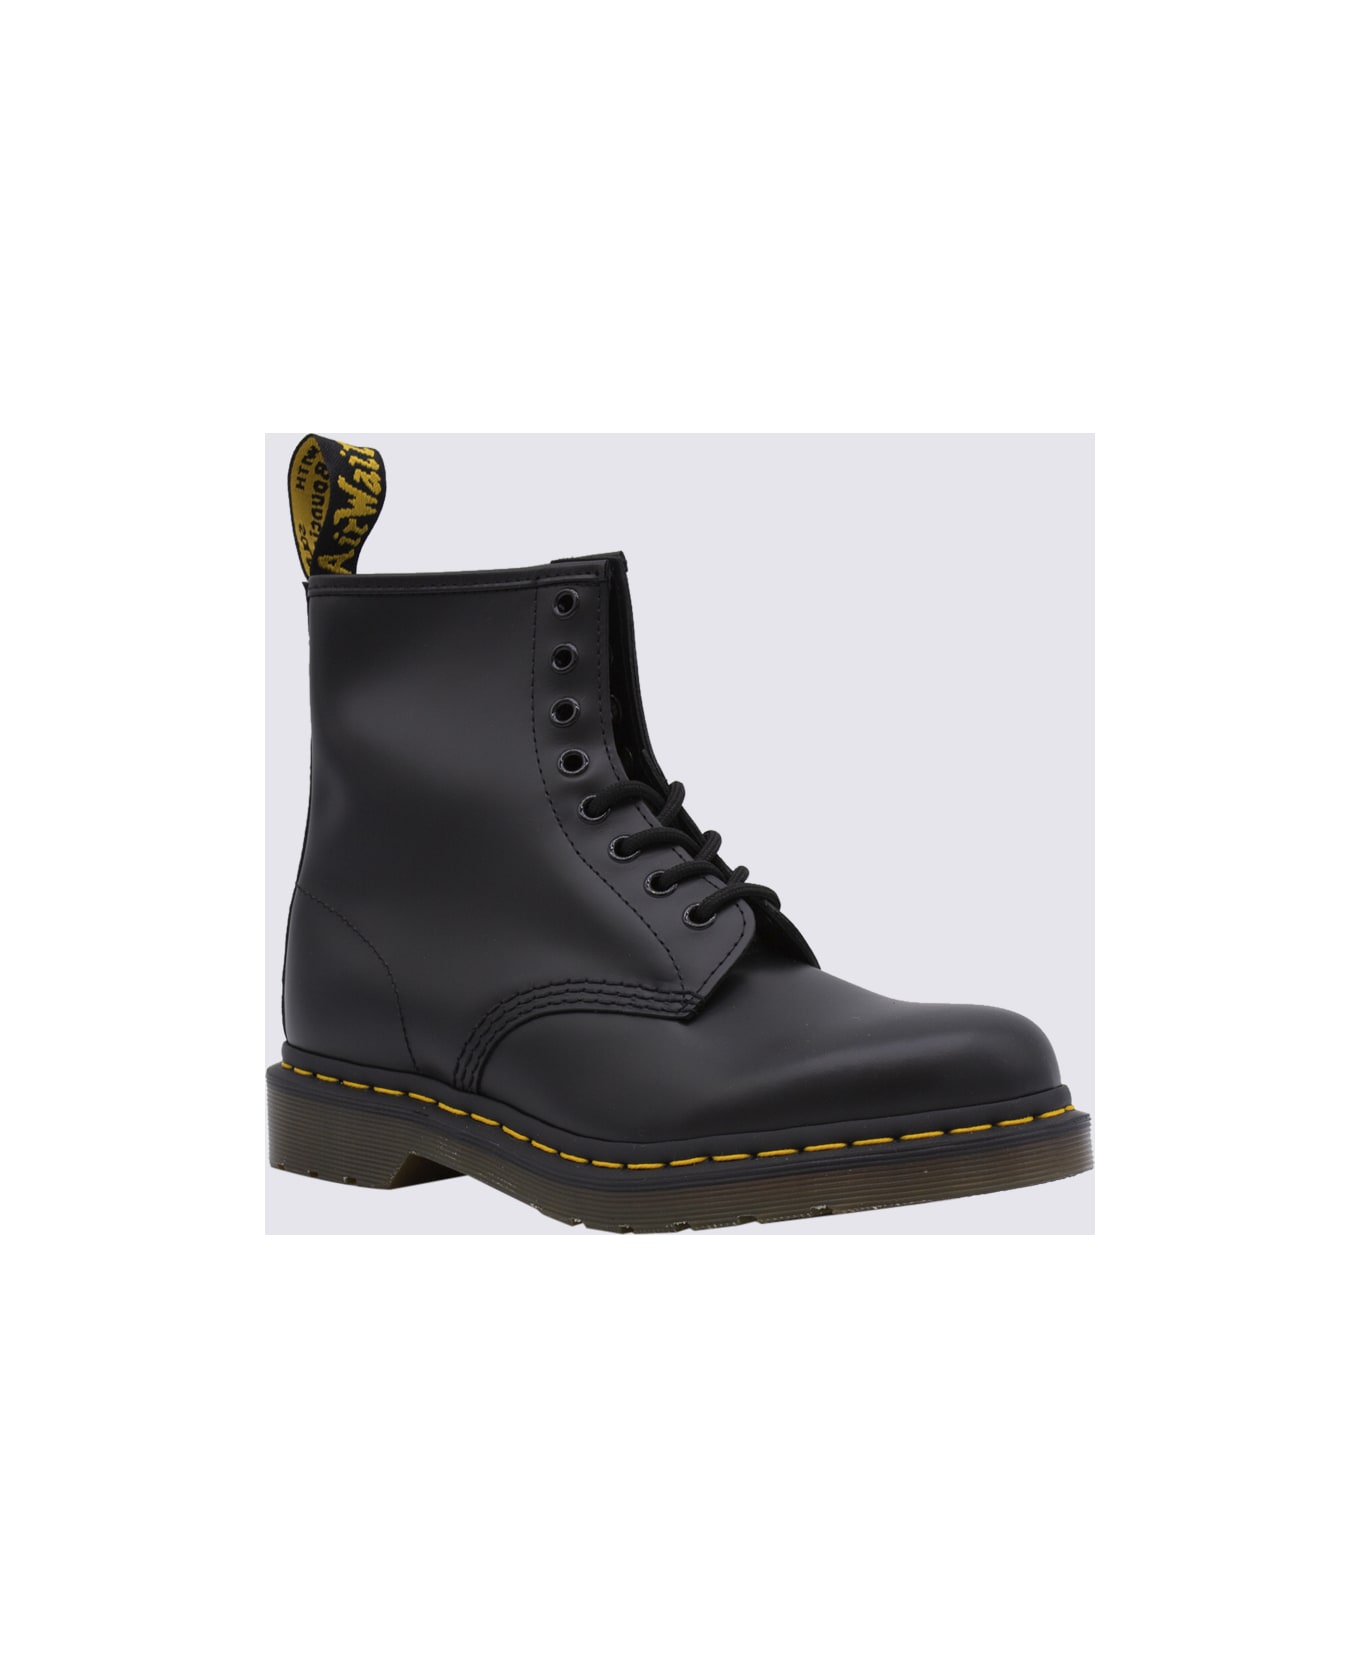 Dr. Martens Black 1460 Smooth Leather Boots - Black